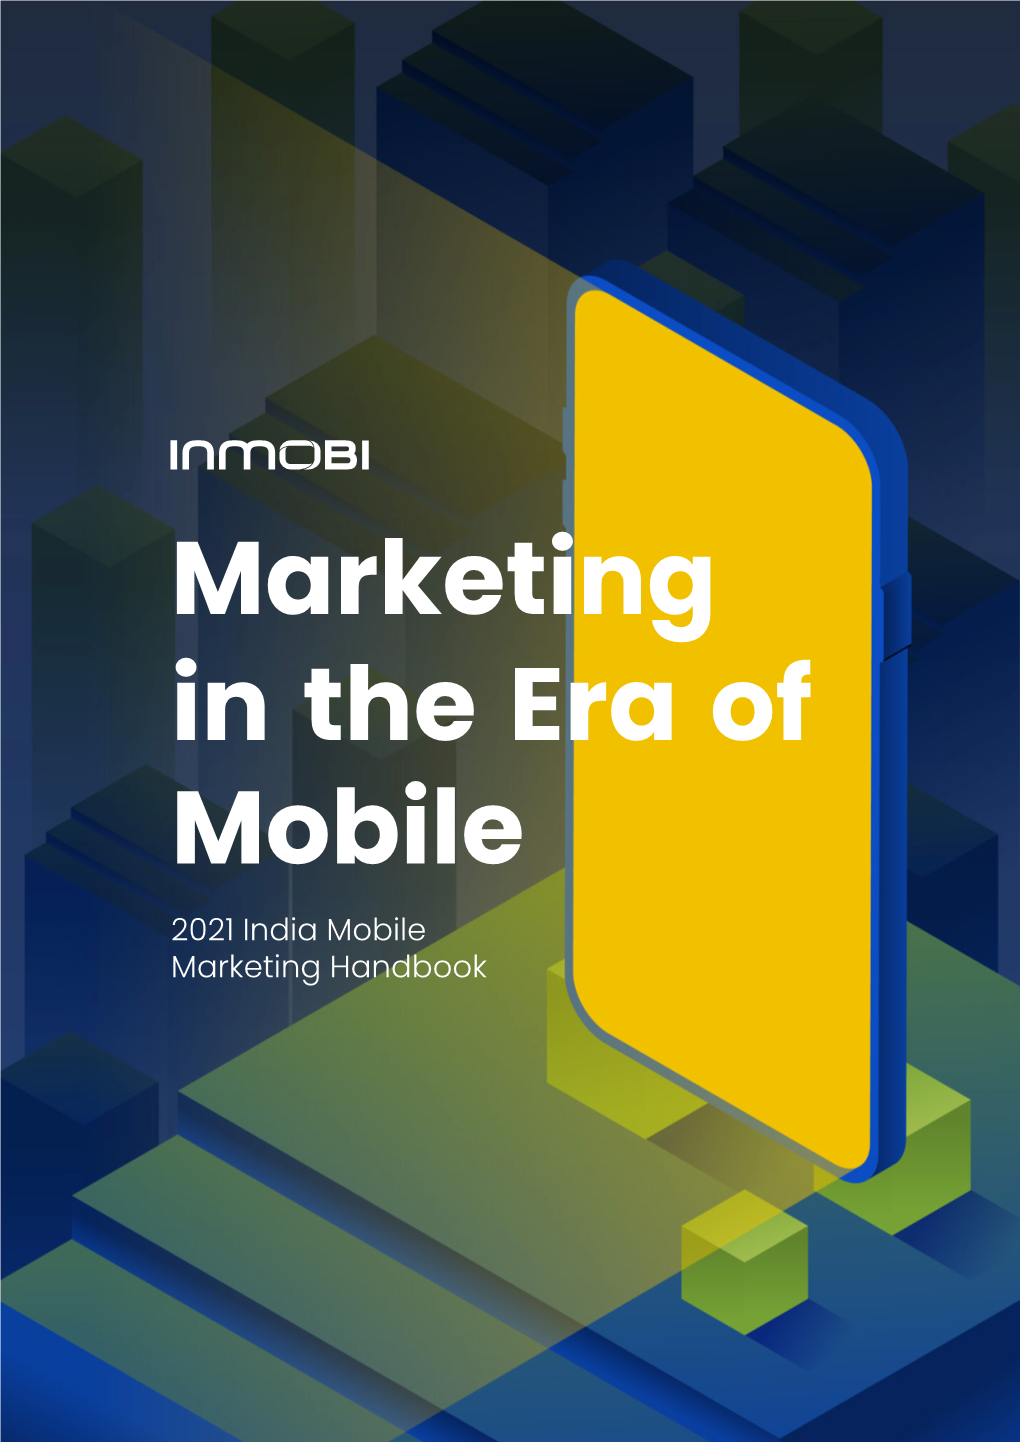 2021 India Mobile Marketing Handbook Content